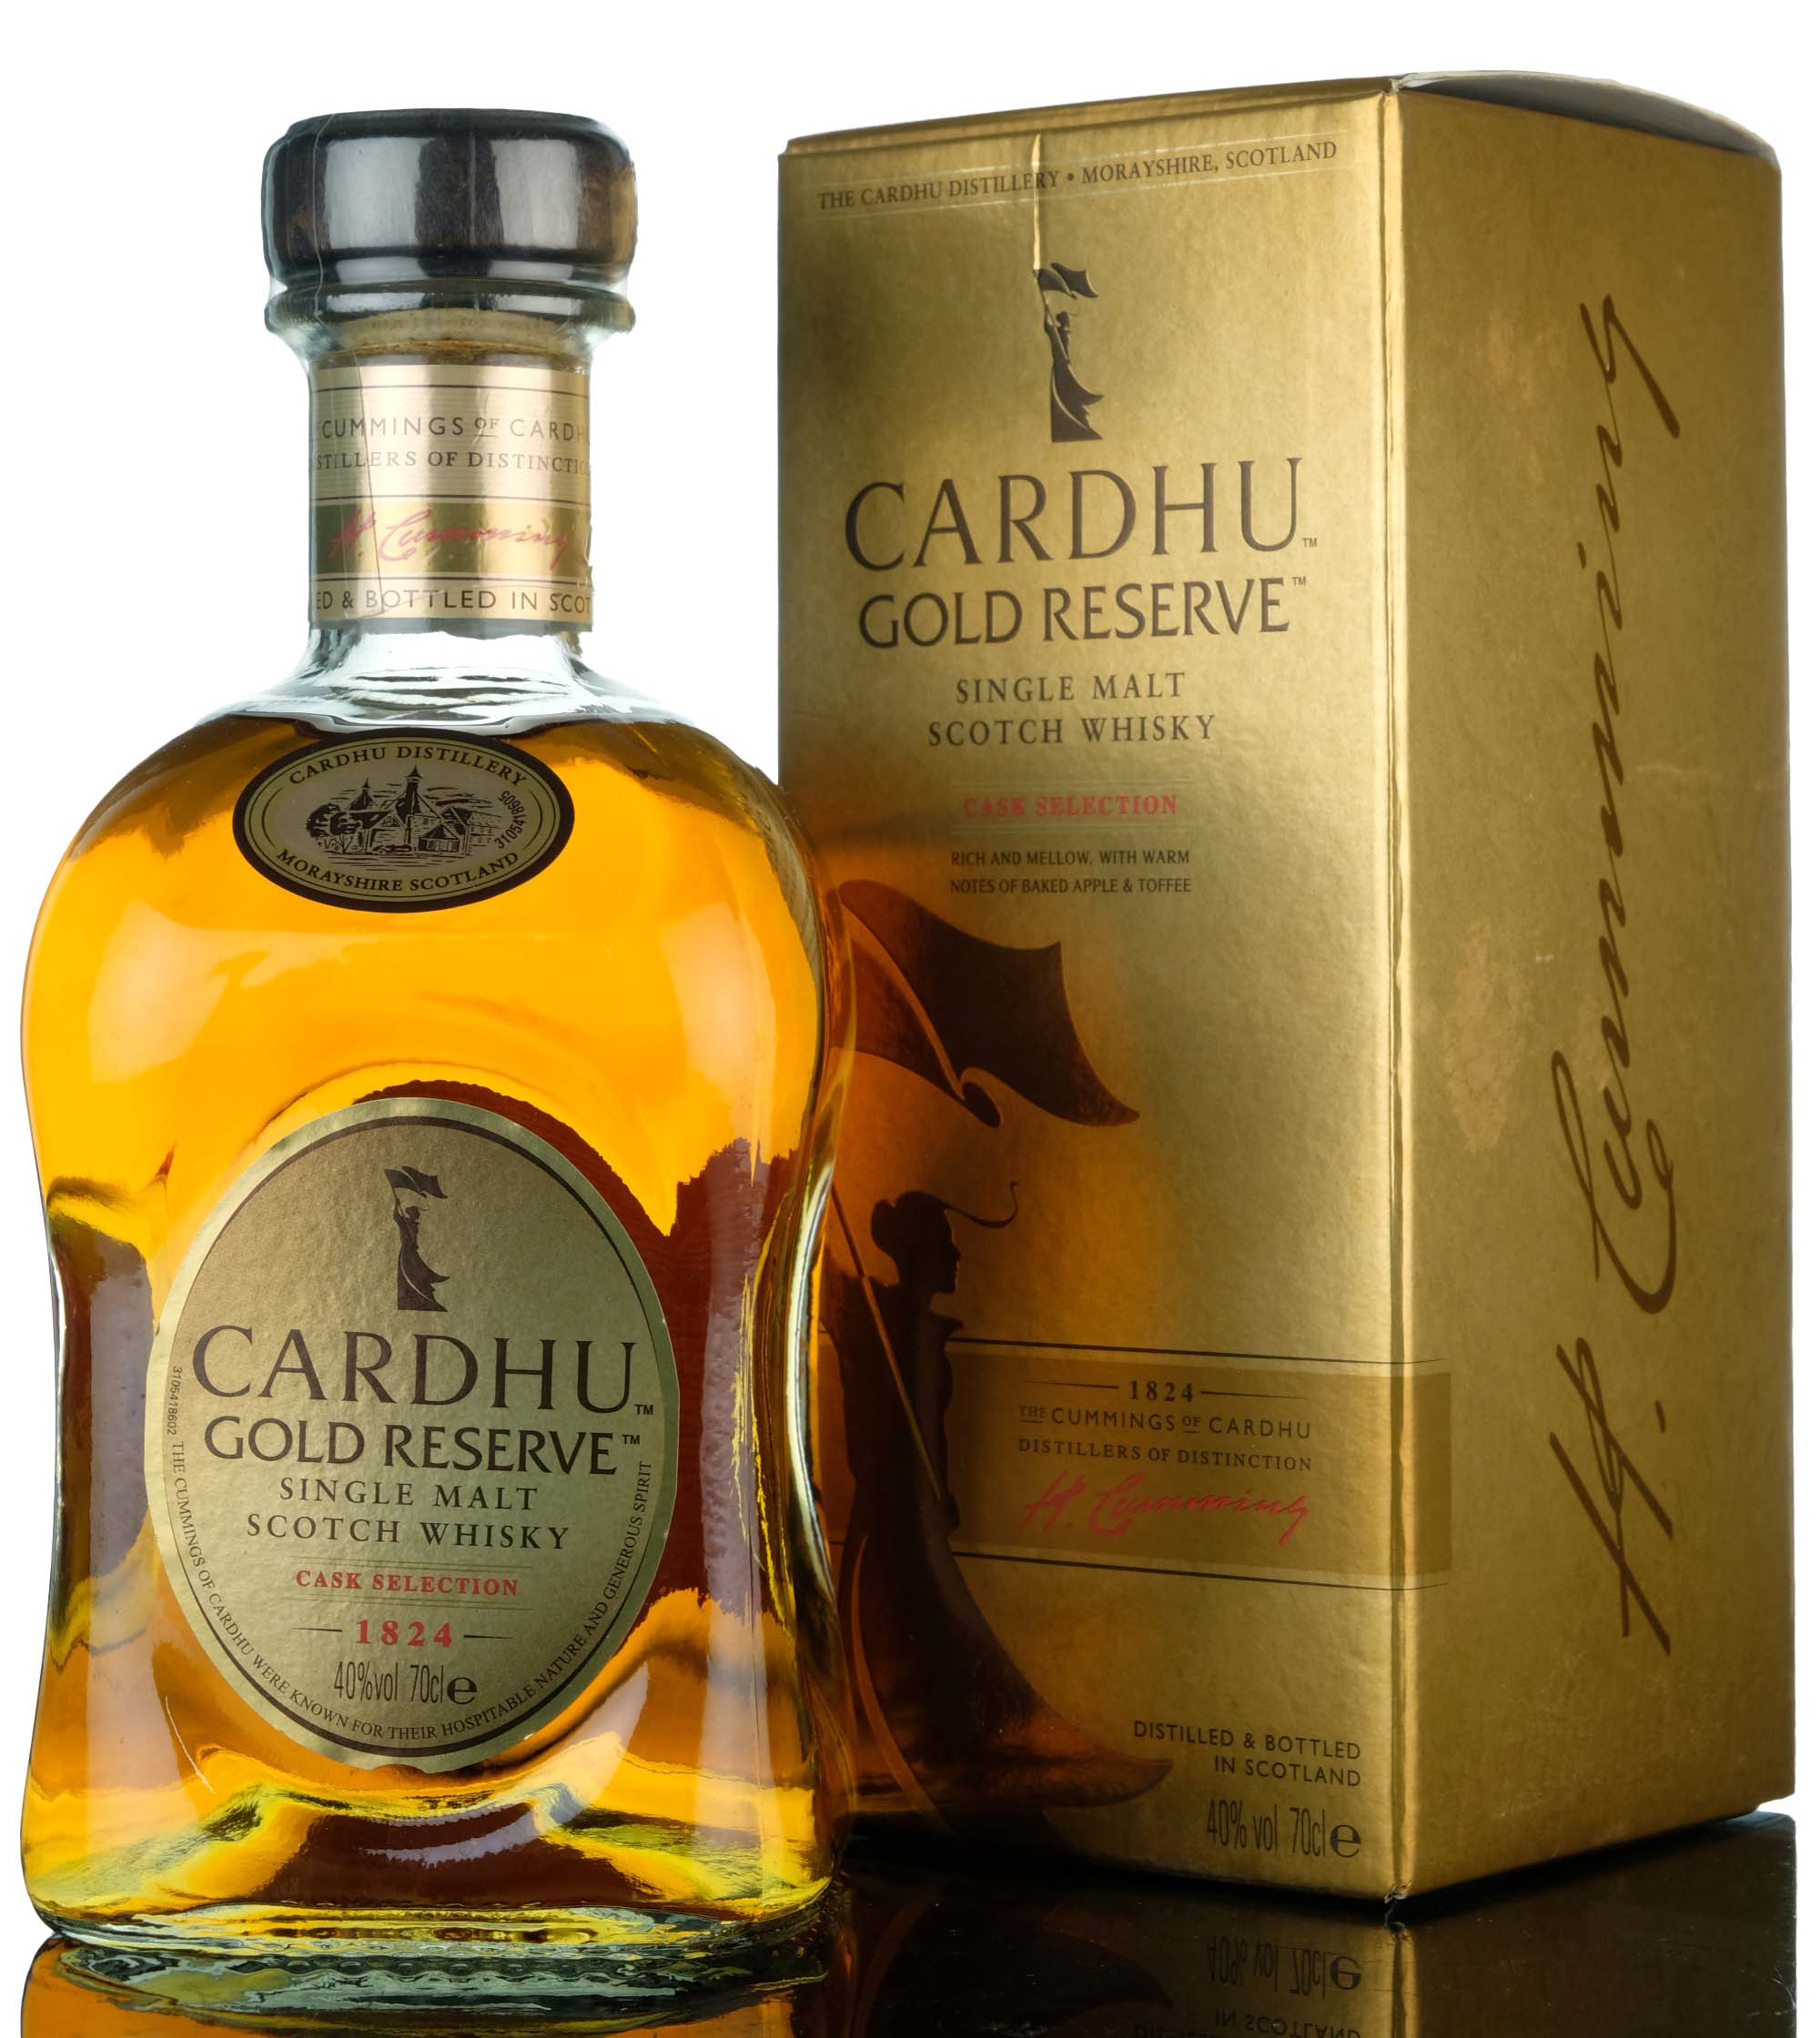 Cardhu Gold Reserve - Cask Selection